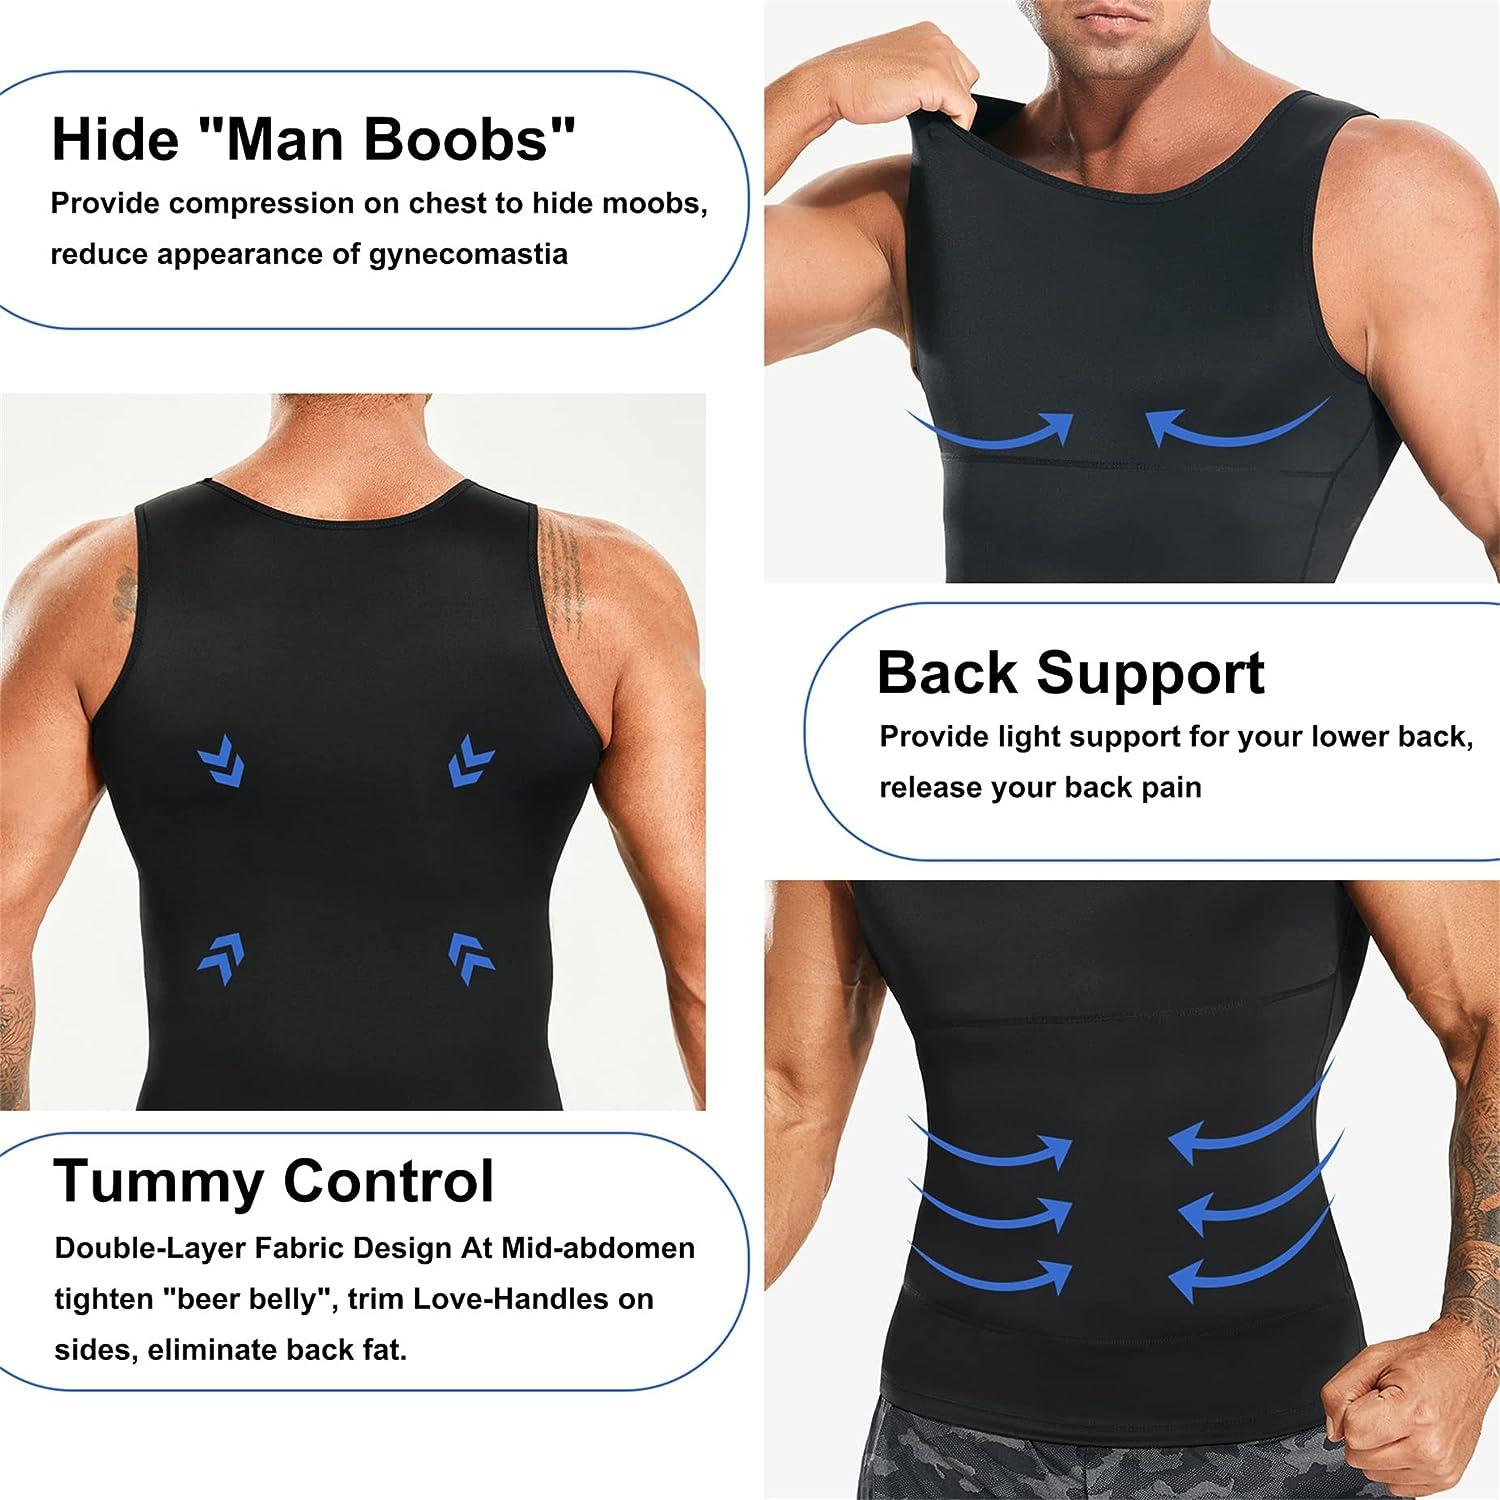 Men Neoprene Body Shaper Slimming Vest Fitness Loss Weight Shirt Tummy  Waist Vest For Gym Sports Compression Muscle Tank Shape Wear 